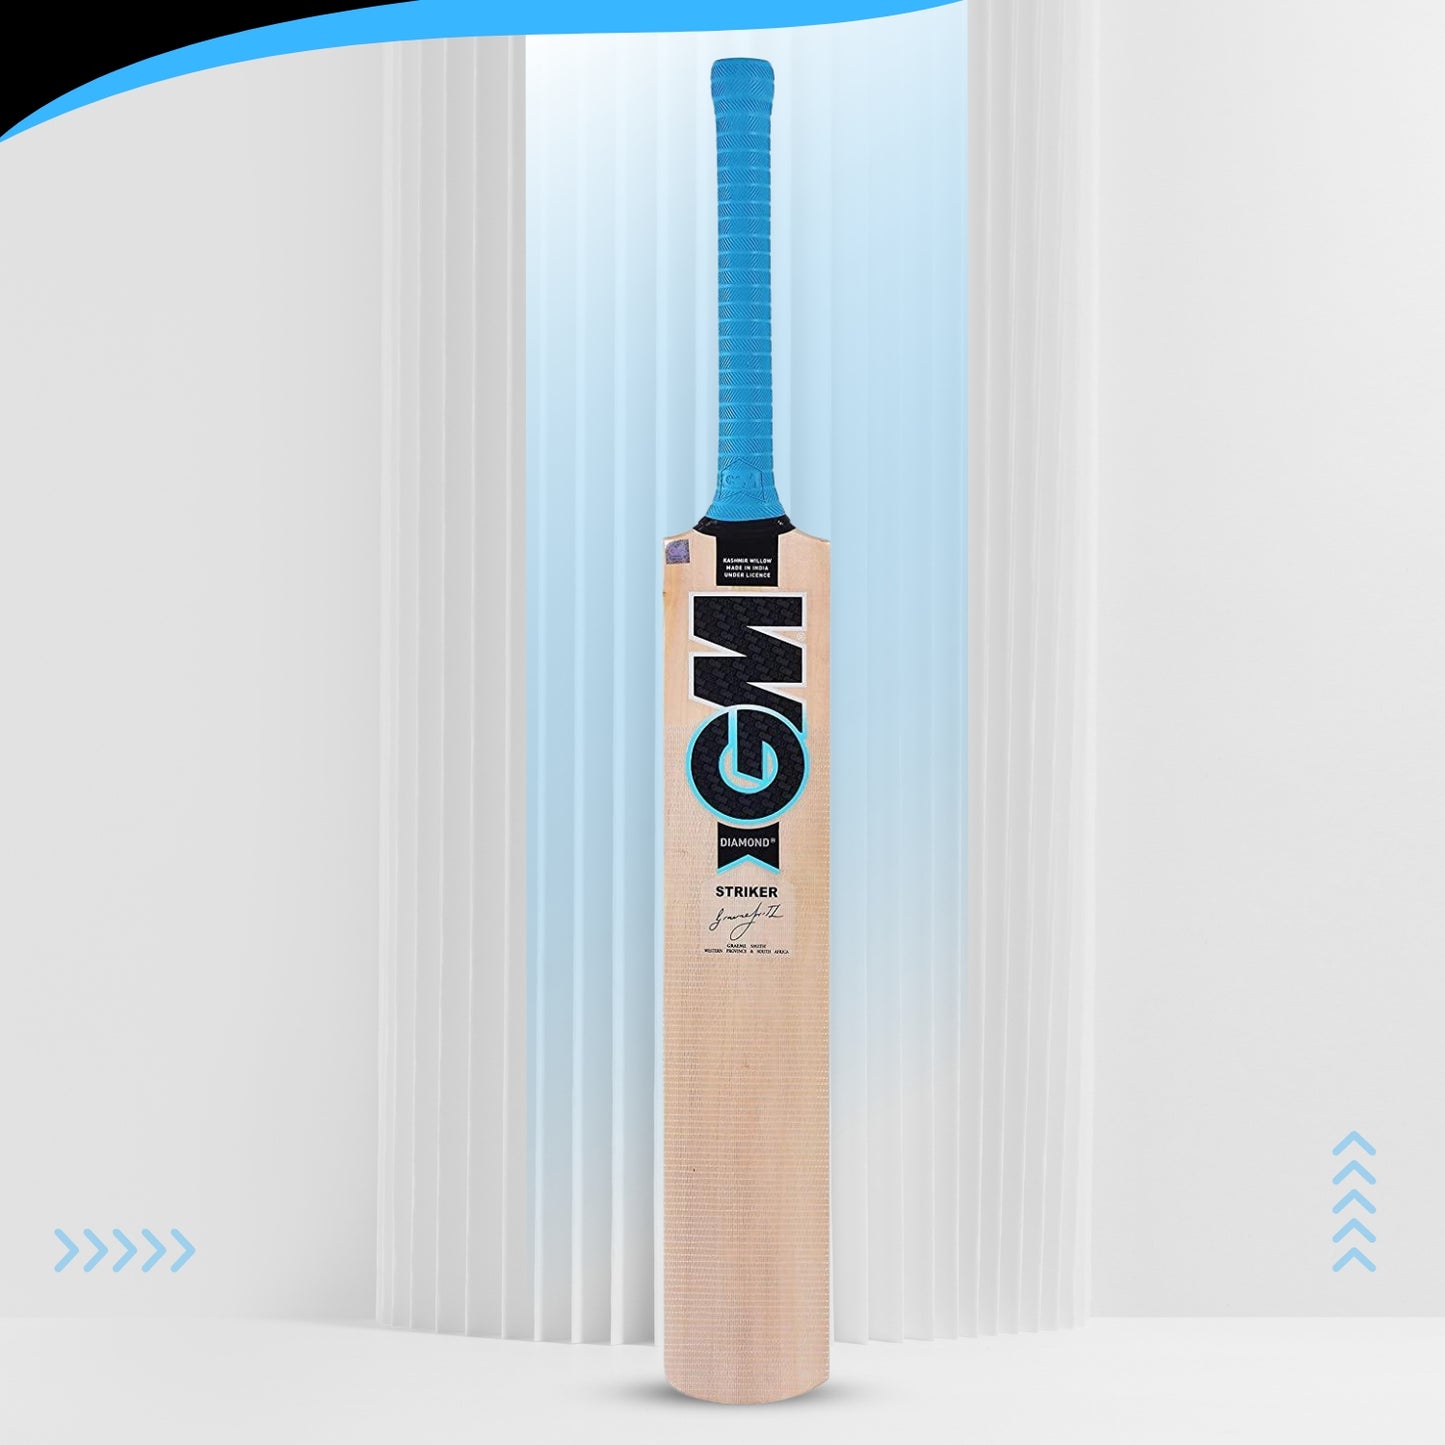 GM Diamond Striker Kashmir Willow Cricket Bat - Best Price online Prokicksports.com